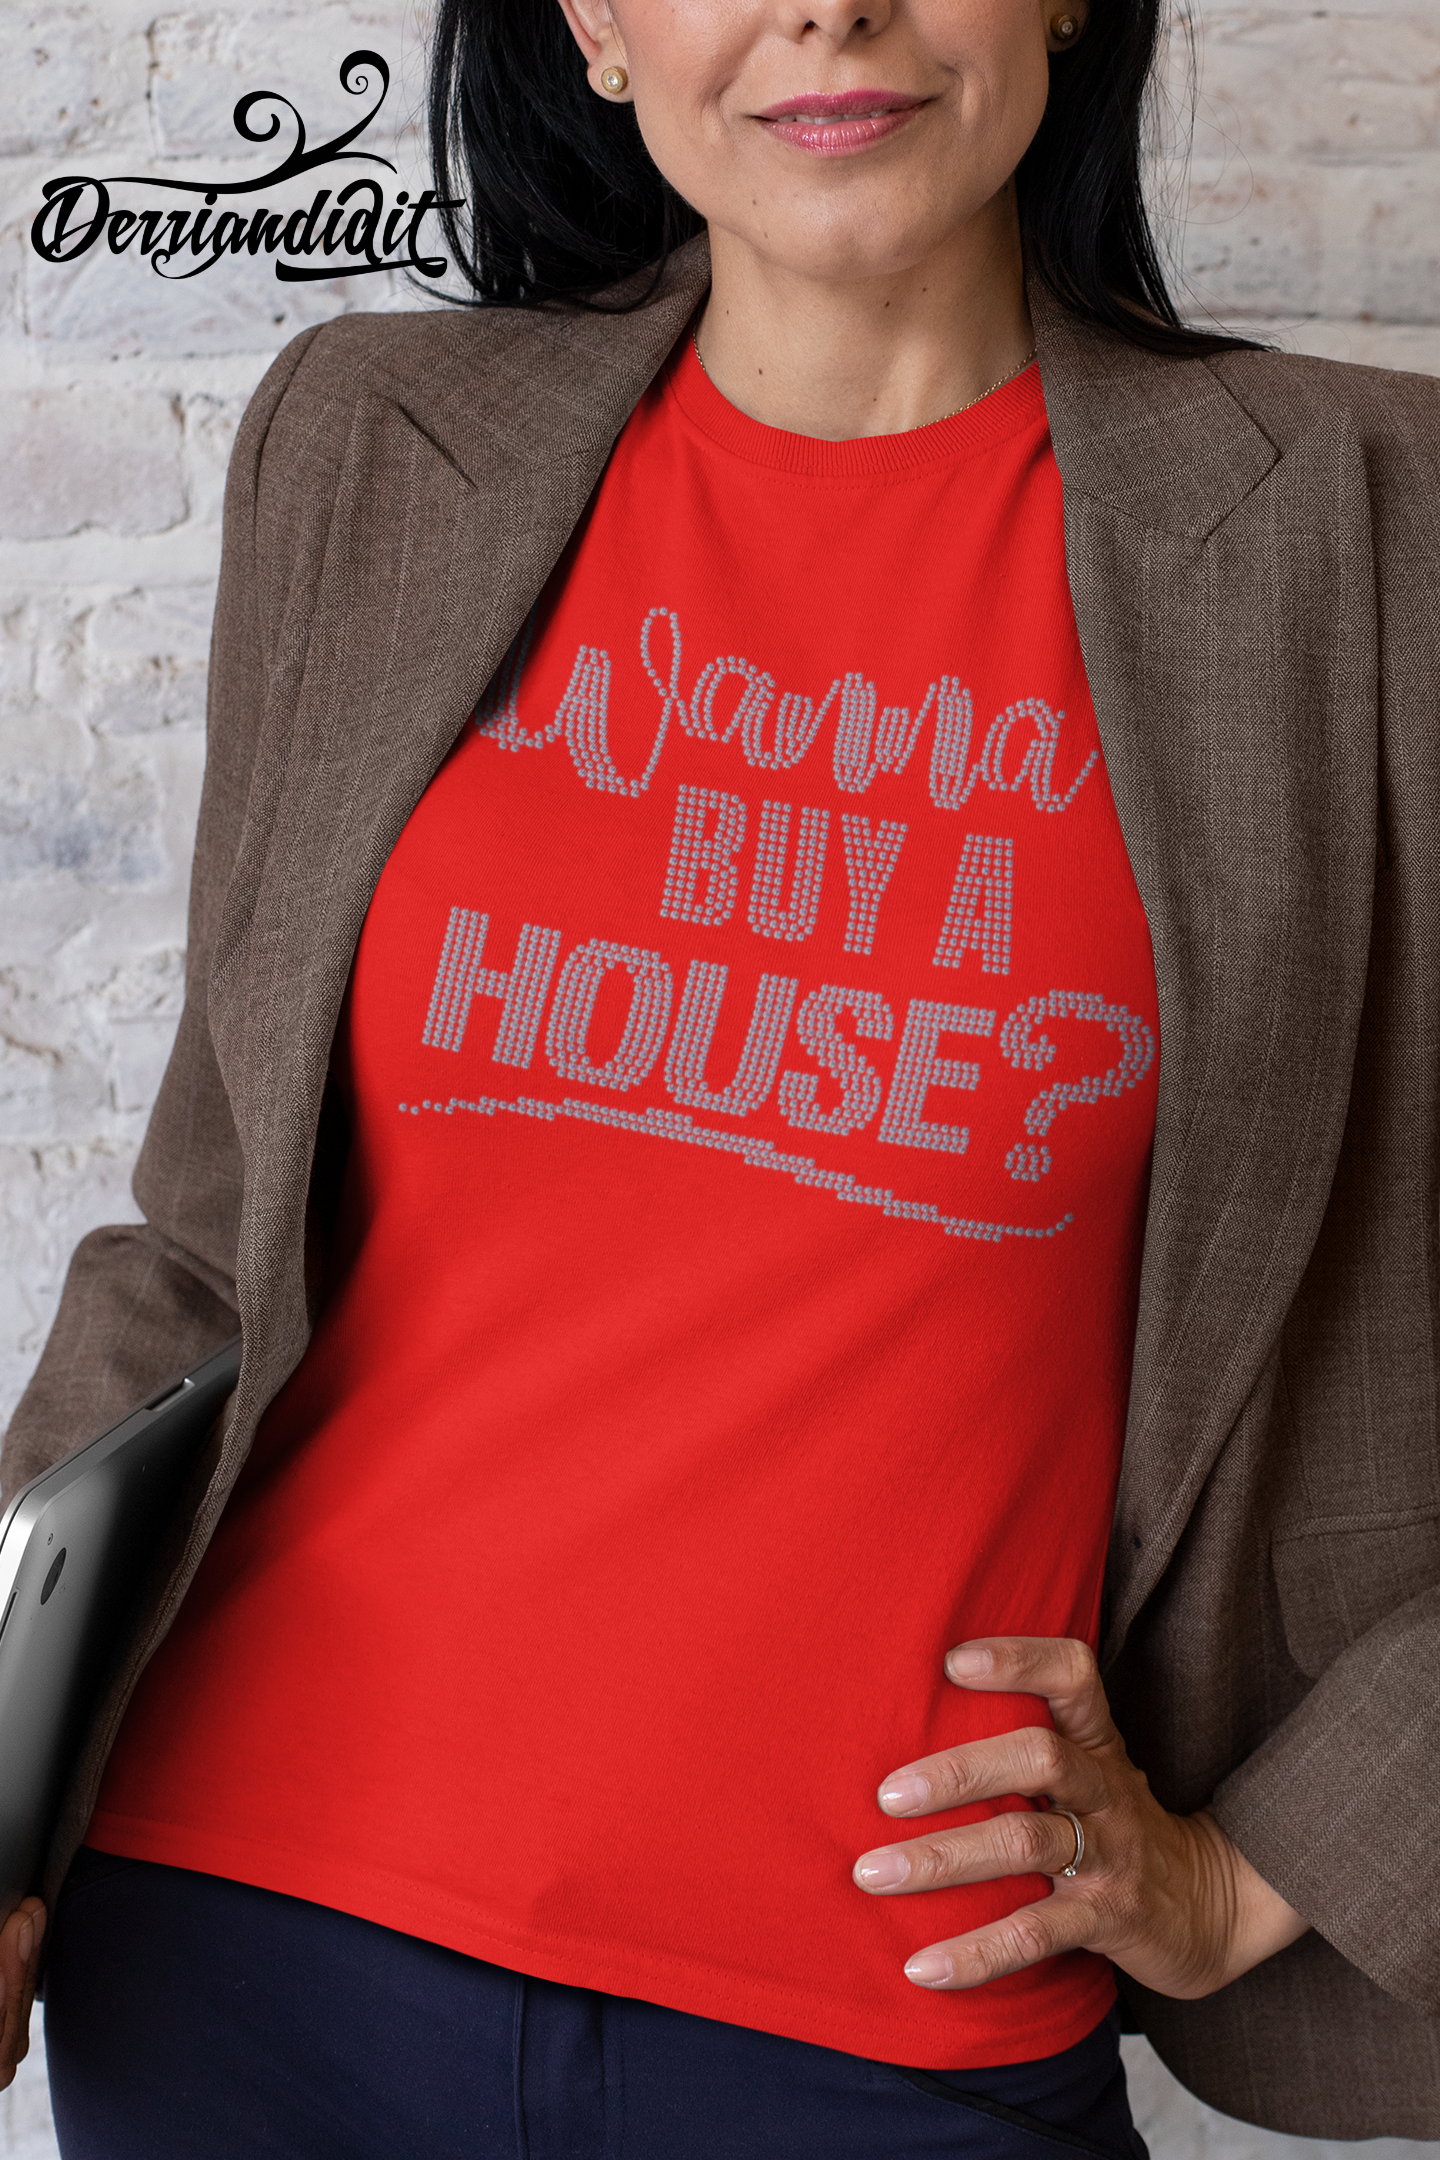 Real Estate Rhinestone Shirt Women Cut/Wanna Sell A House?/ Wanna Buy A House?/ Custom Orders Available